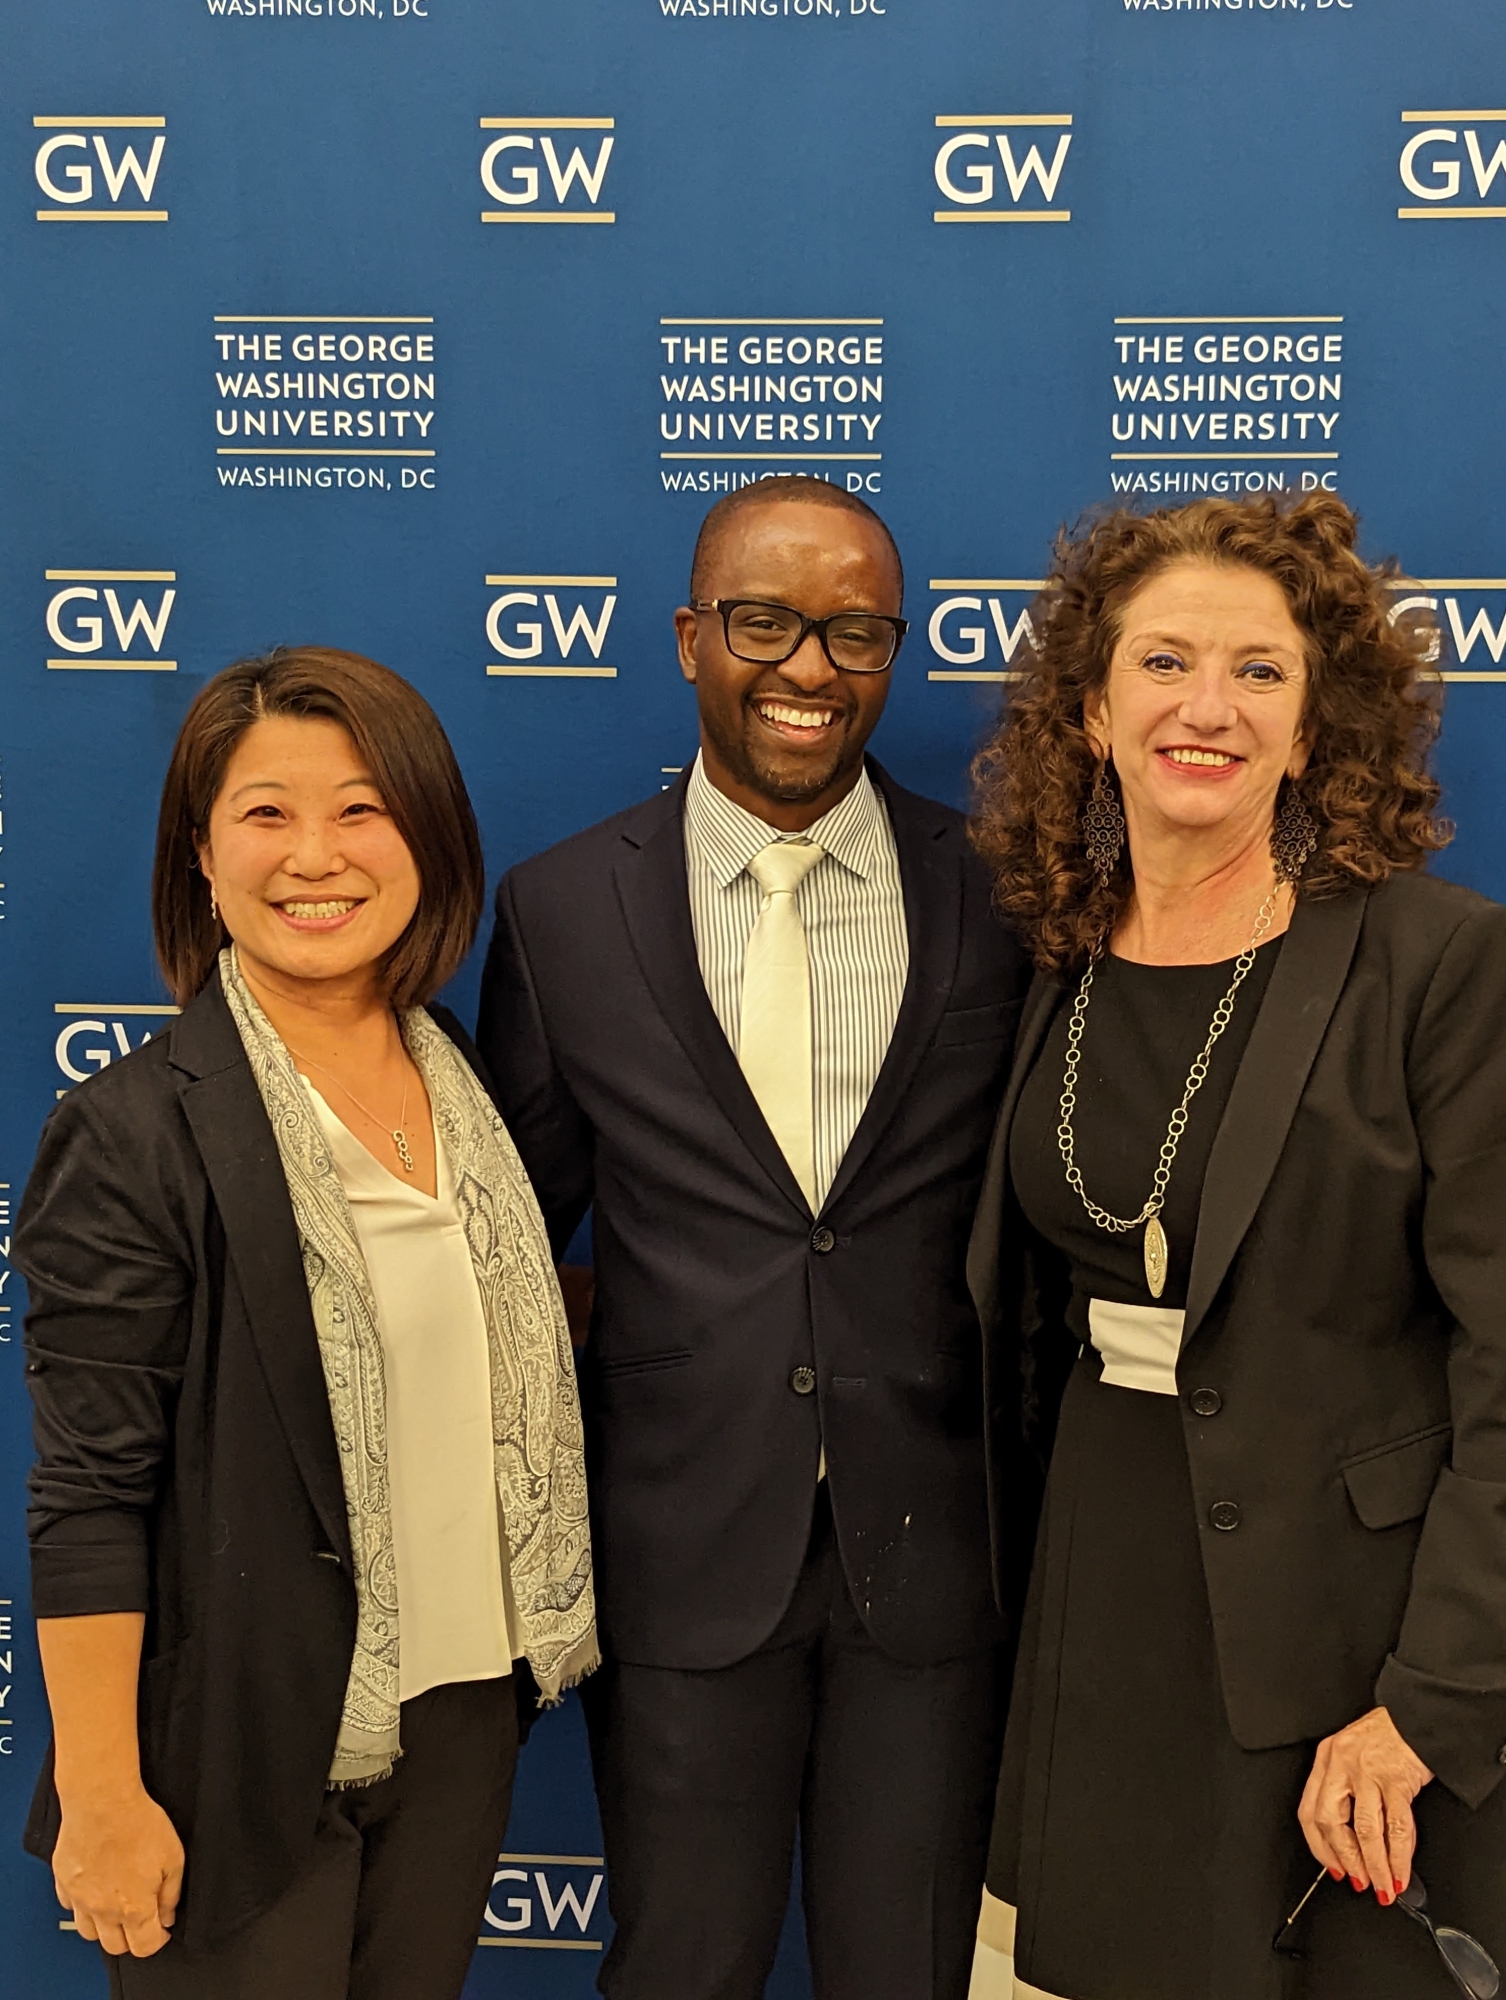 Fran Buntman, Hiromi Ishizawa, and Antwan Jones in front of a blue backdrop with the GW logo